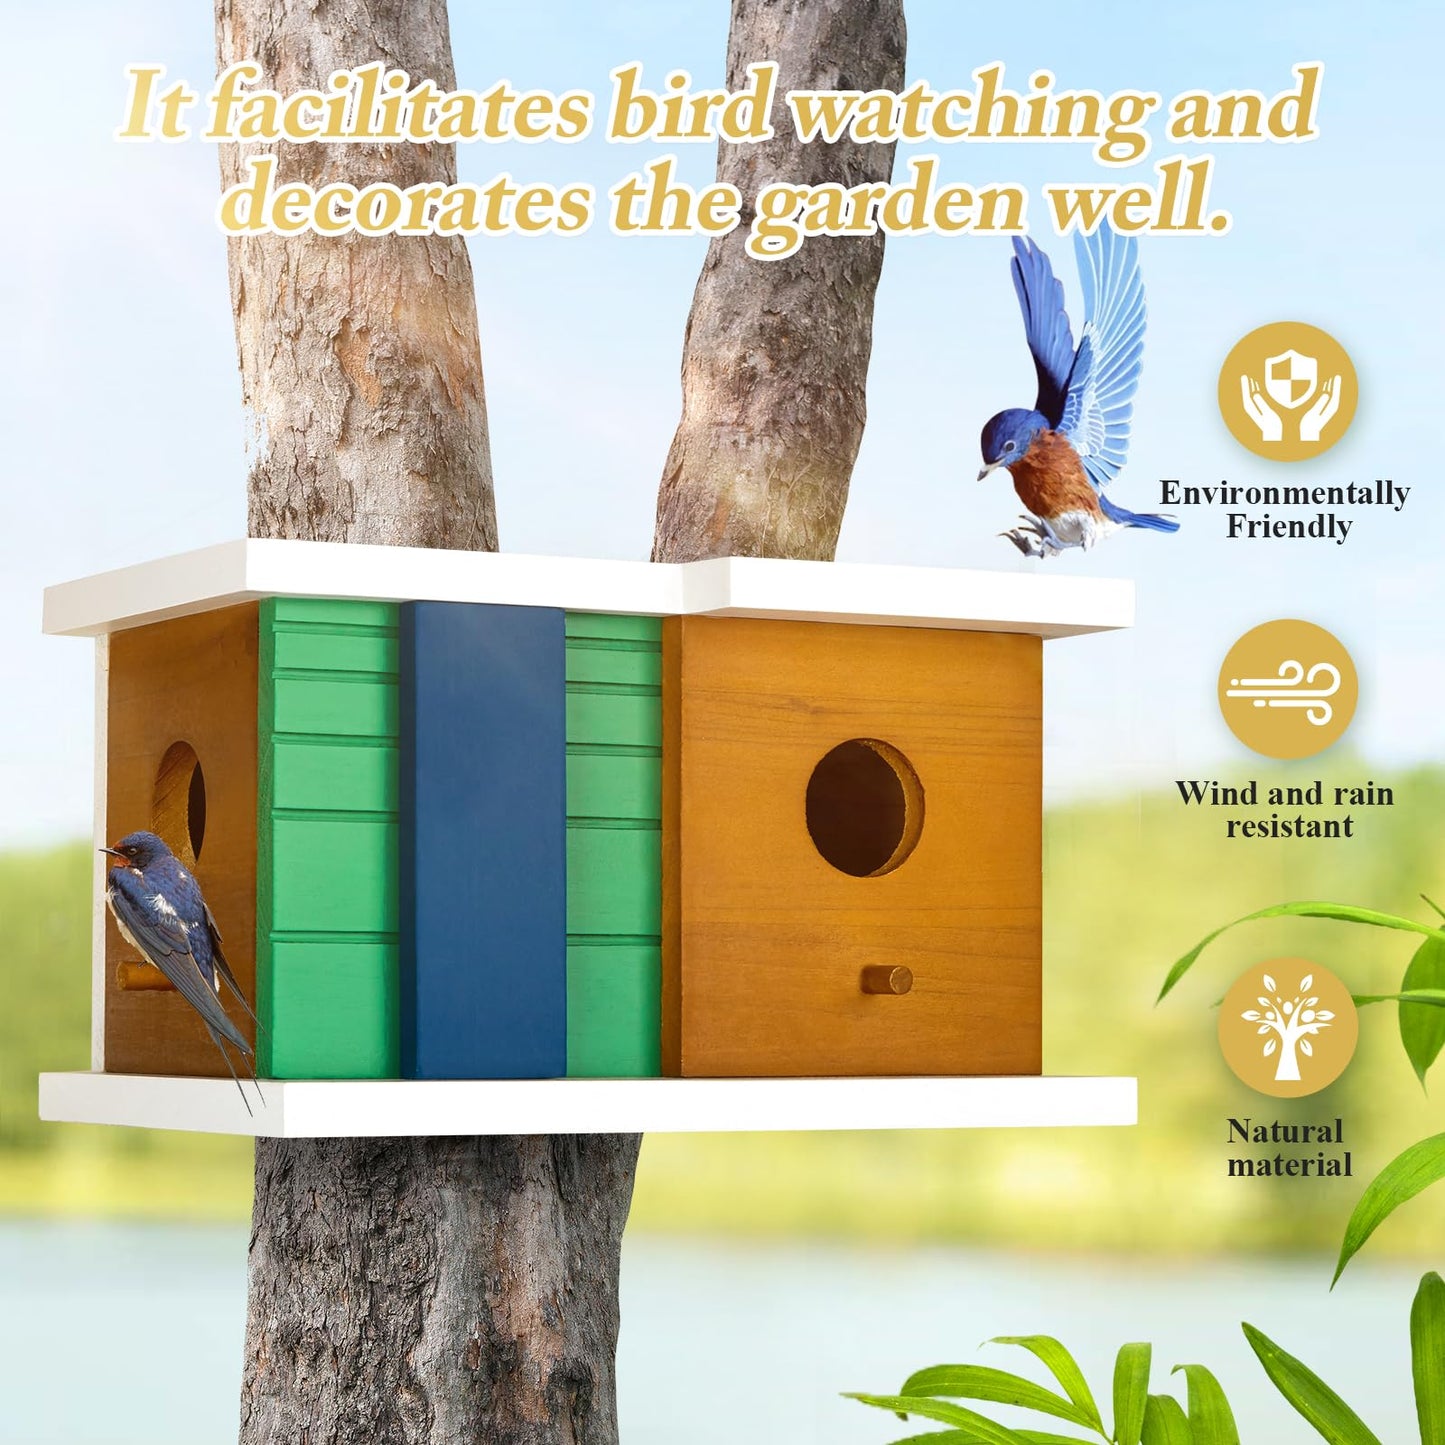 Bird House Wooden Birdhouse with 2 Holes - Bird House for Outside Ideal for Bluebird,Finch, Cardinals and Garden Wild Birds - Outdoor Hanging Bird